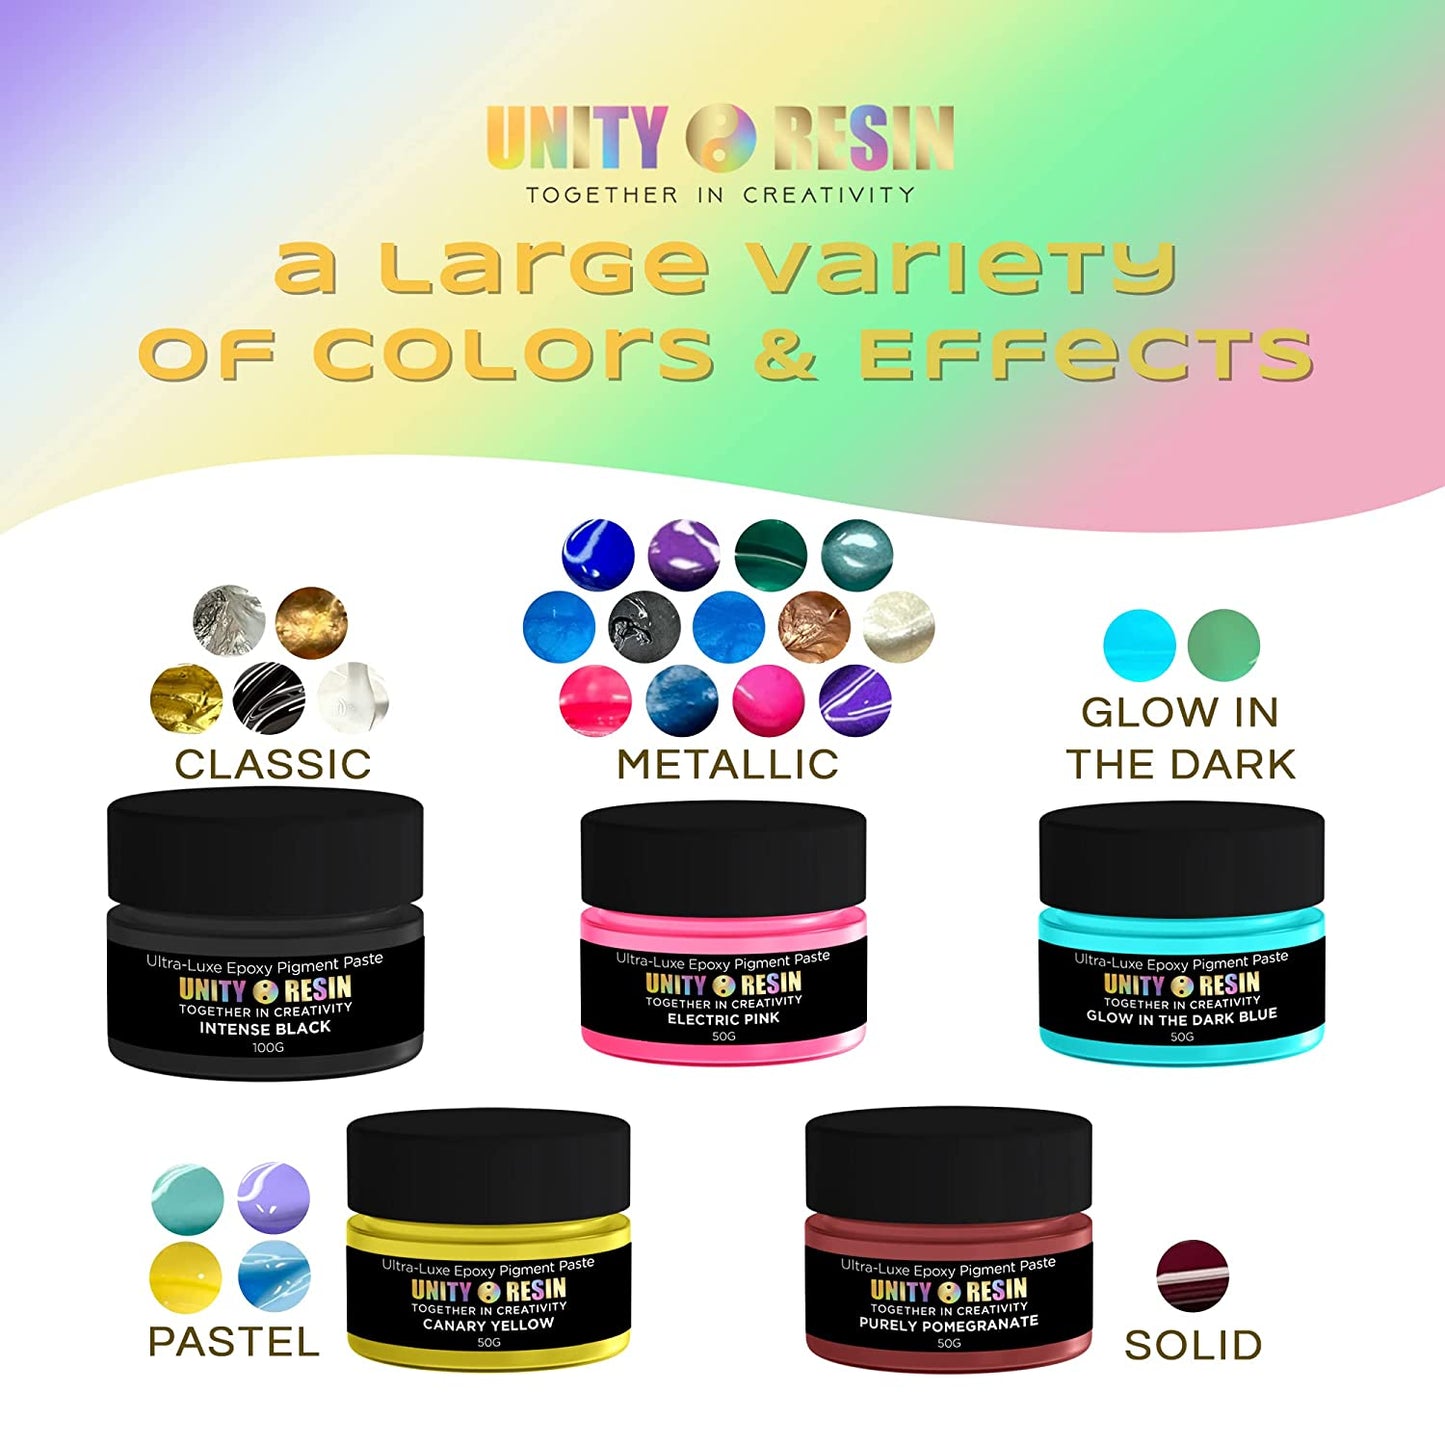 Ultra-Luxe Epoxy Resin Pigment Paste- STONE GRAY (50G).